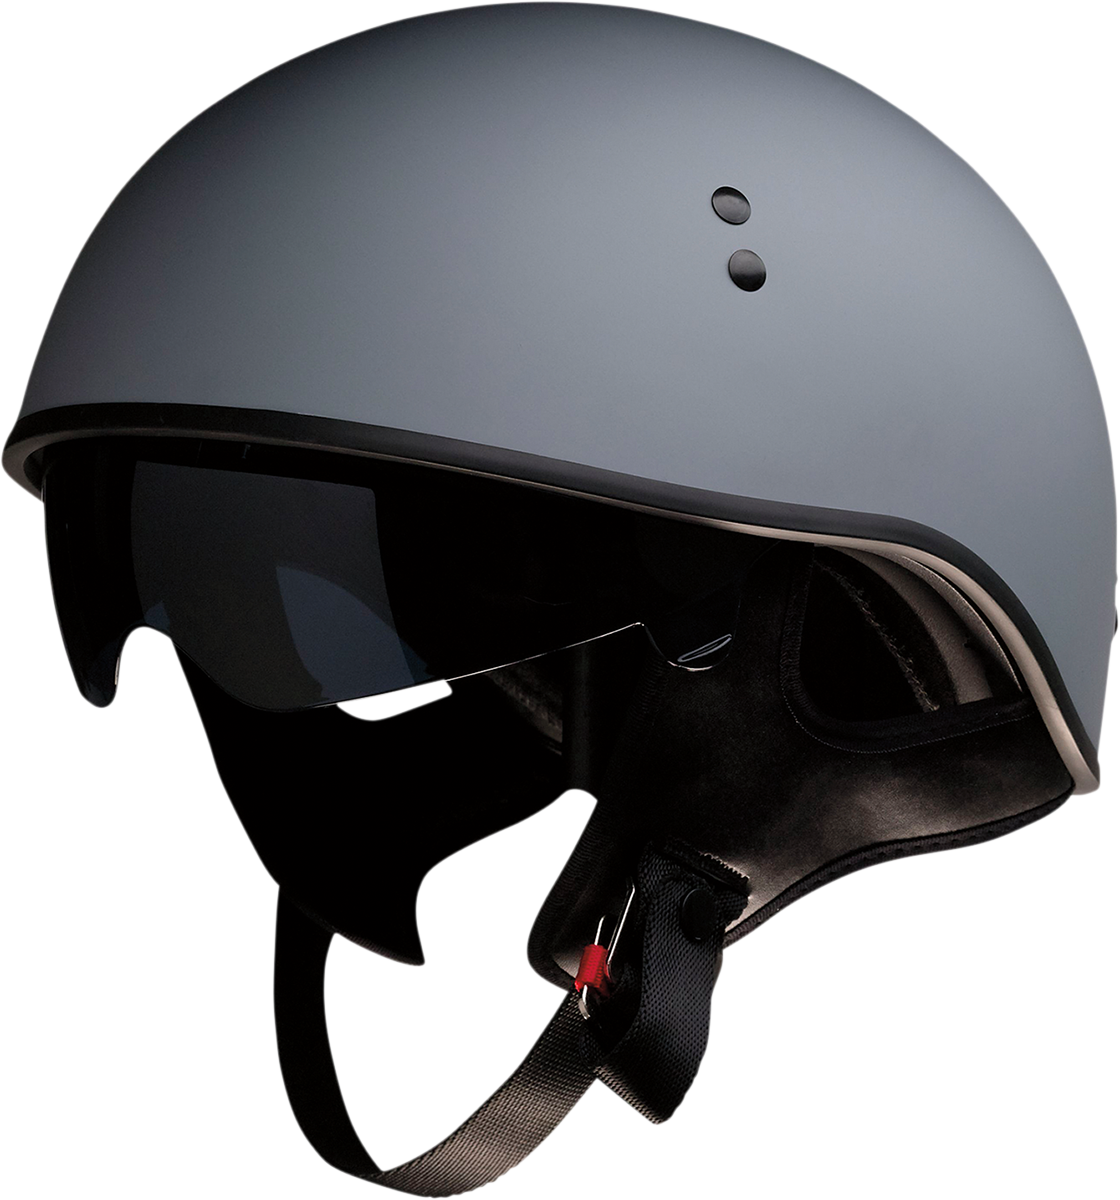 Z1R Vagrant Primer Gray Unisex Adult Motorcycle Riding Street Half Helmet